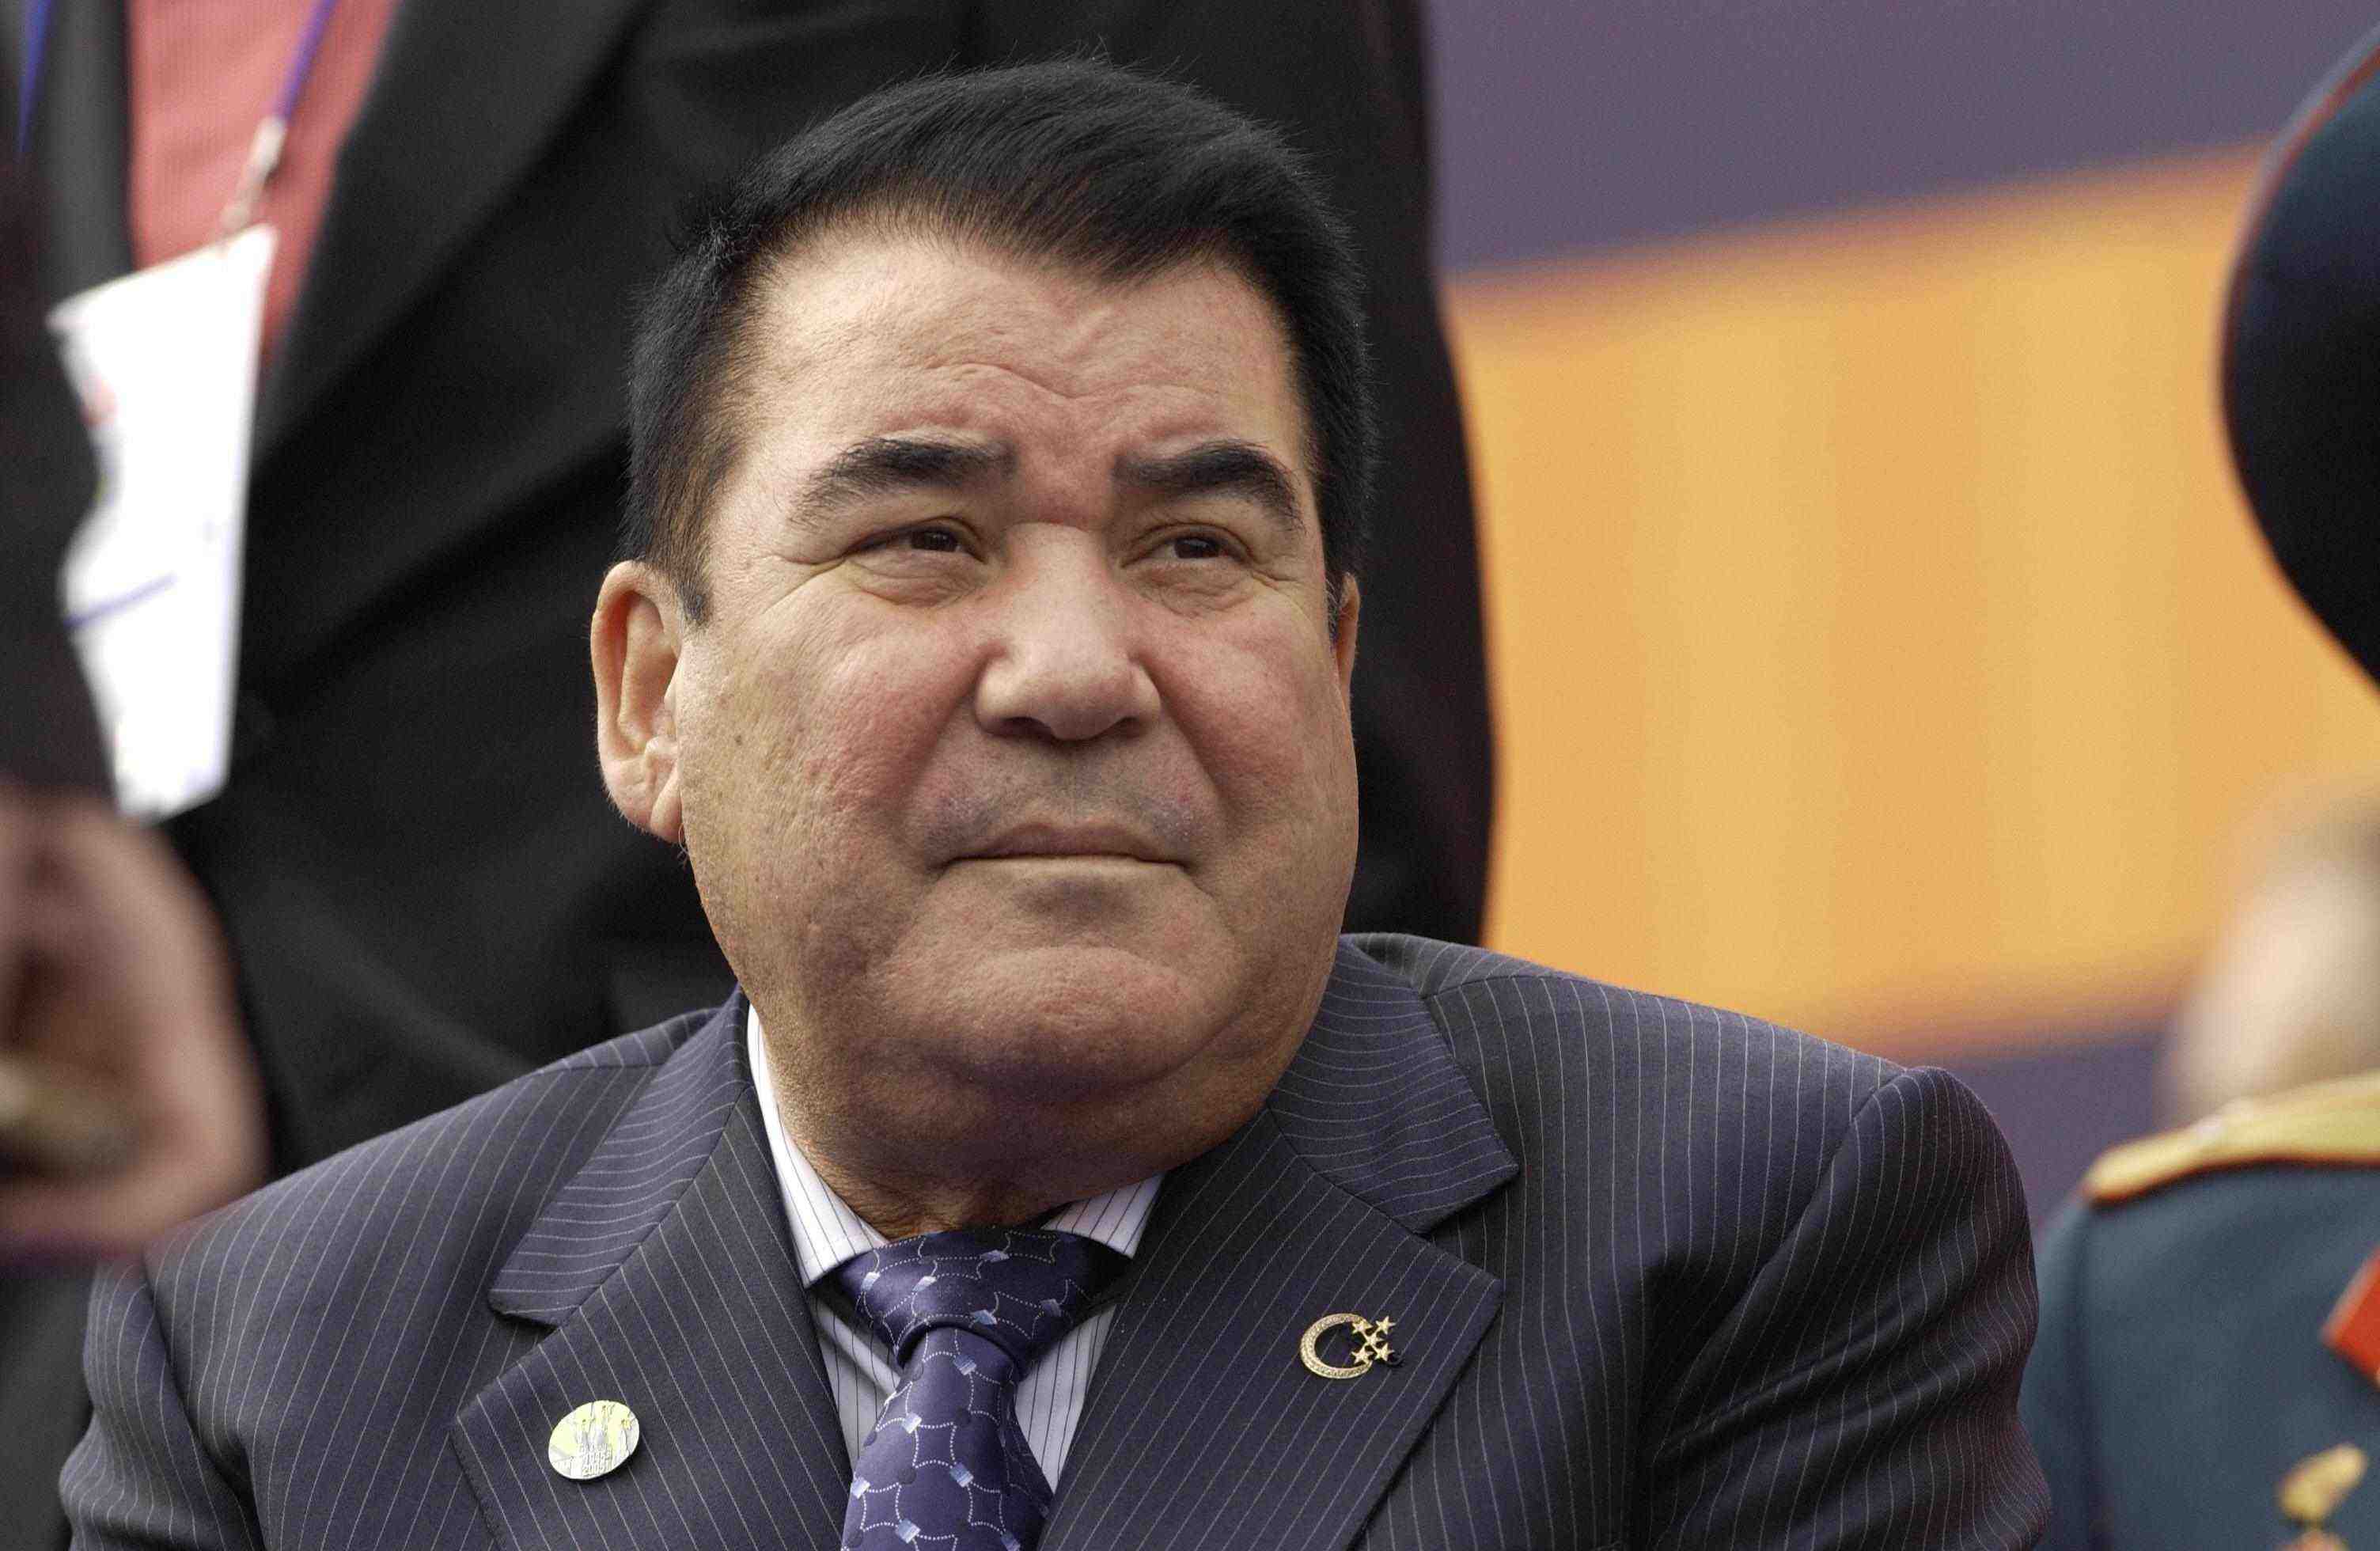 Craziest Dictators Turkmenbashi Face